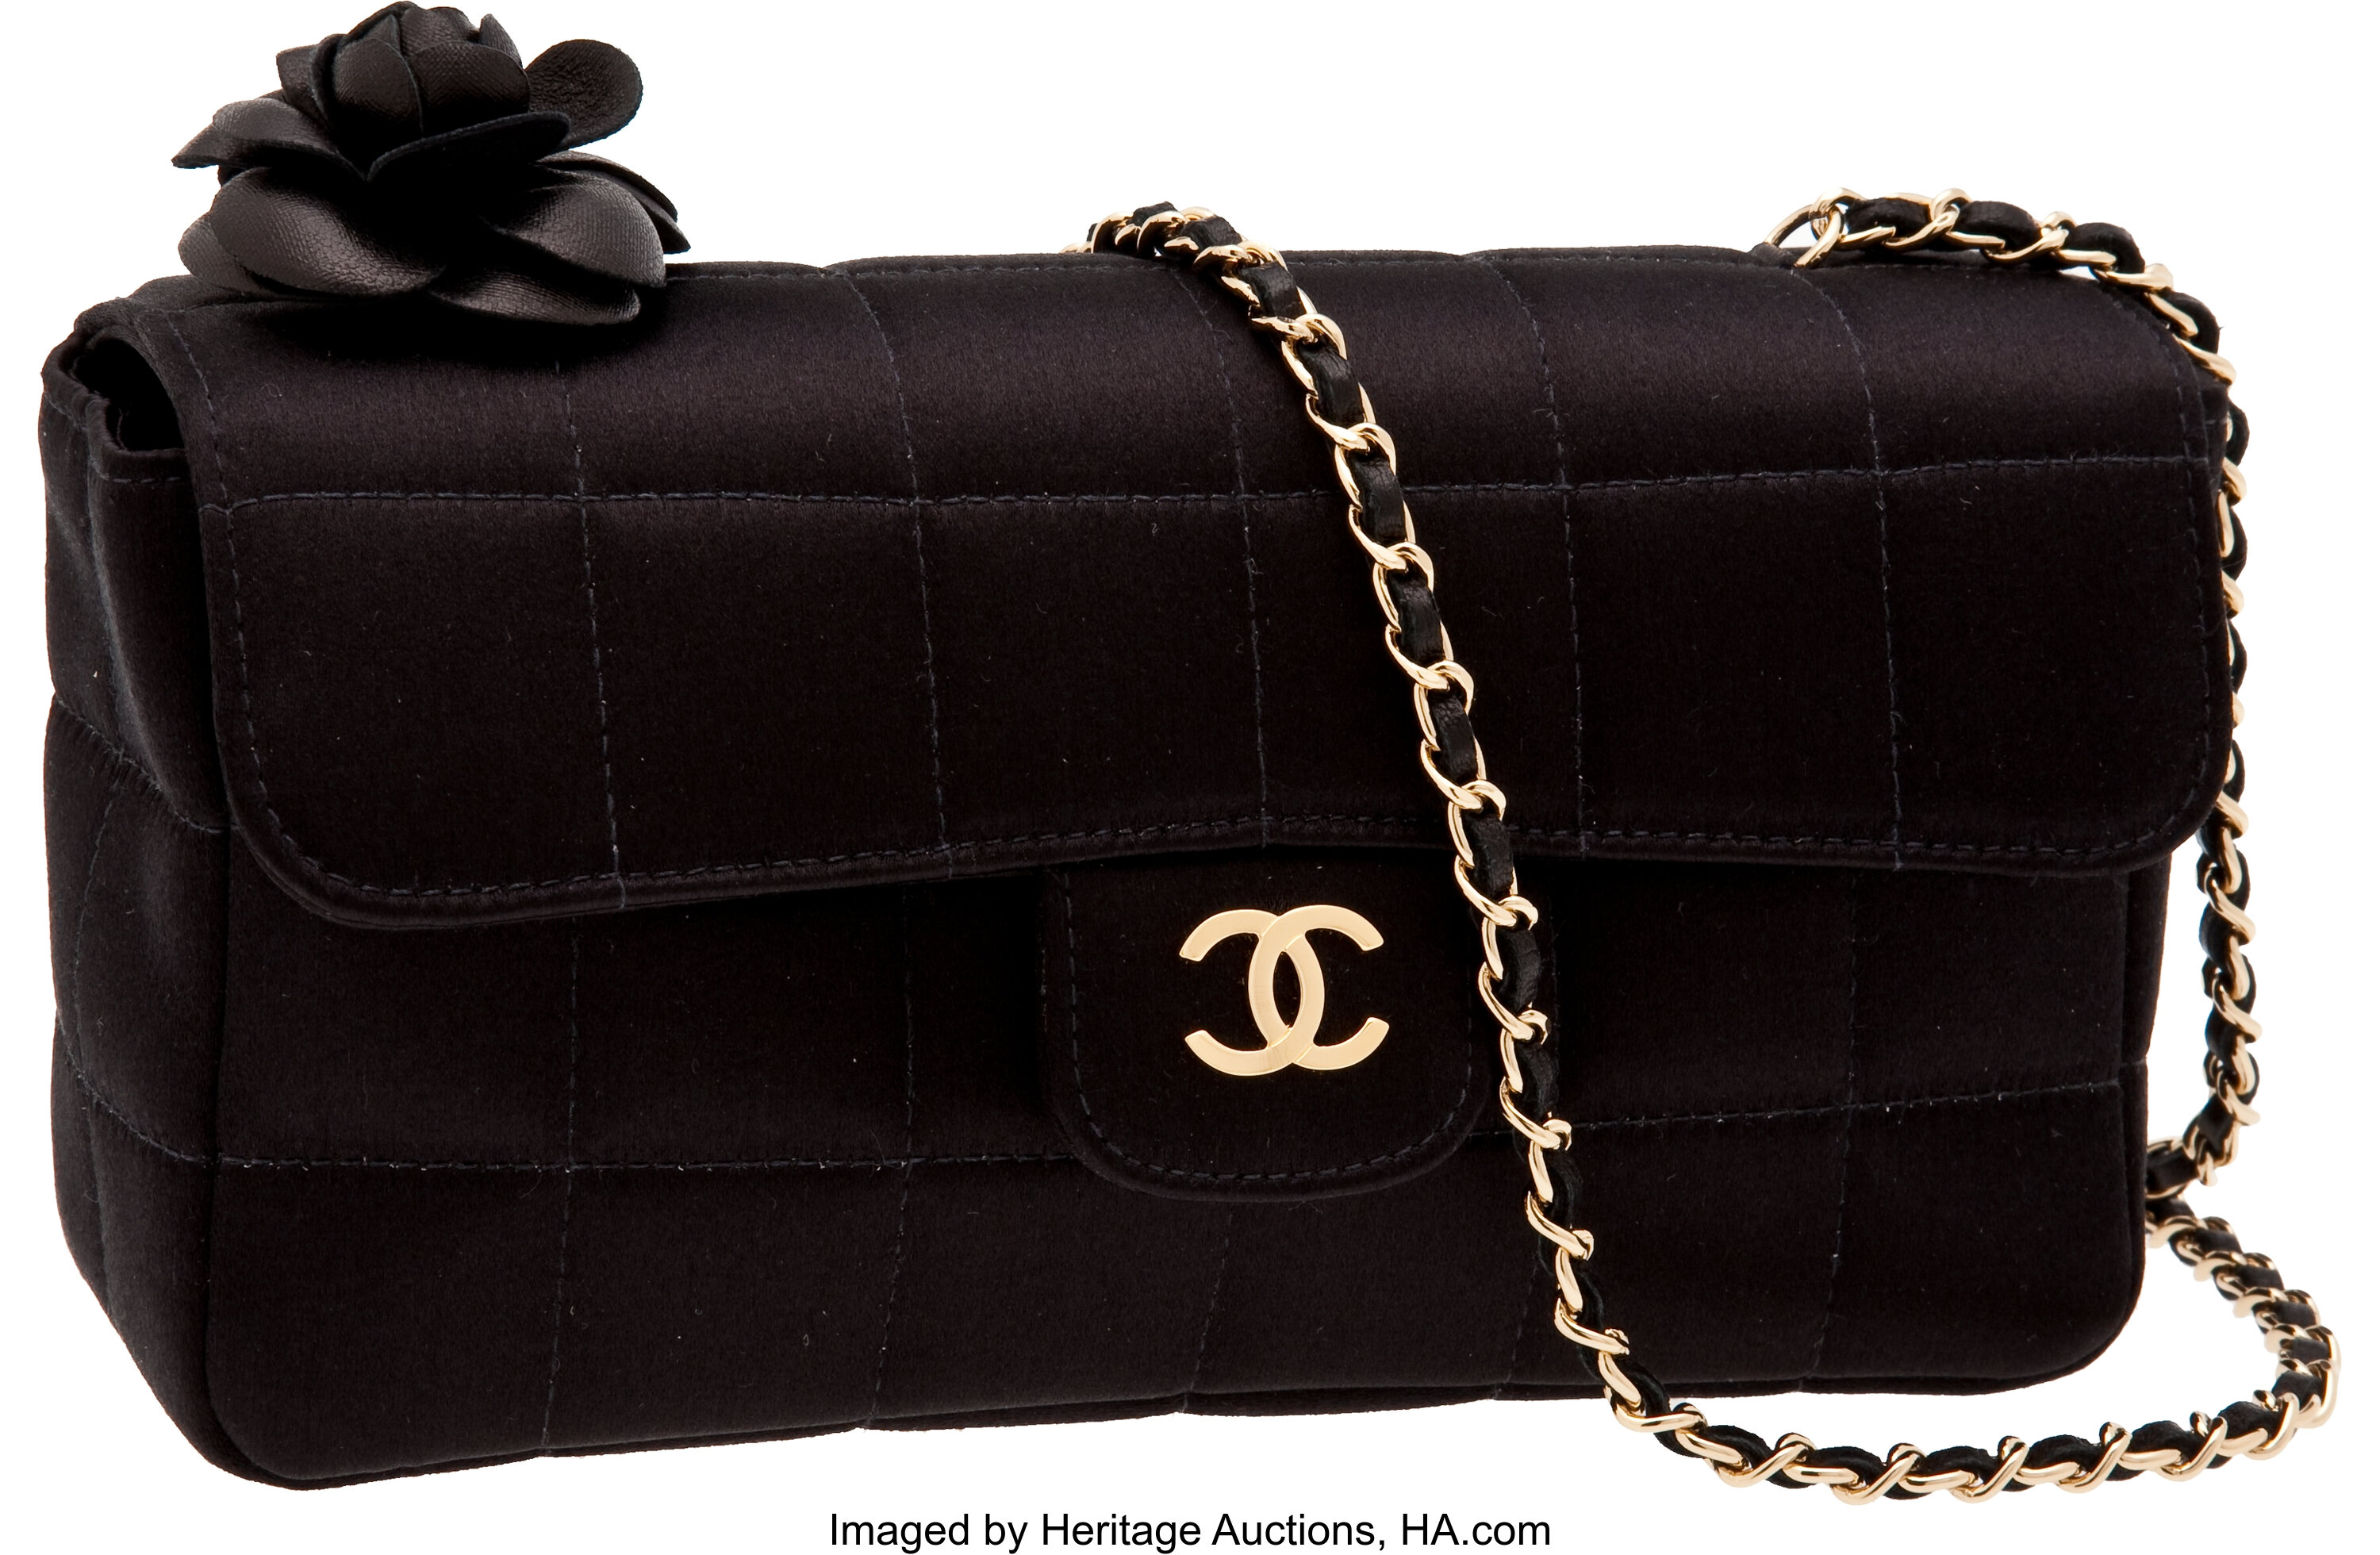 Chanel CHANEL Cocomark Flower Lace Clutch Bag Satin Black C2616